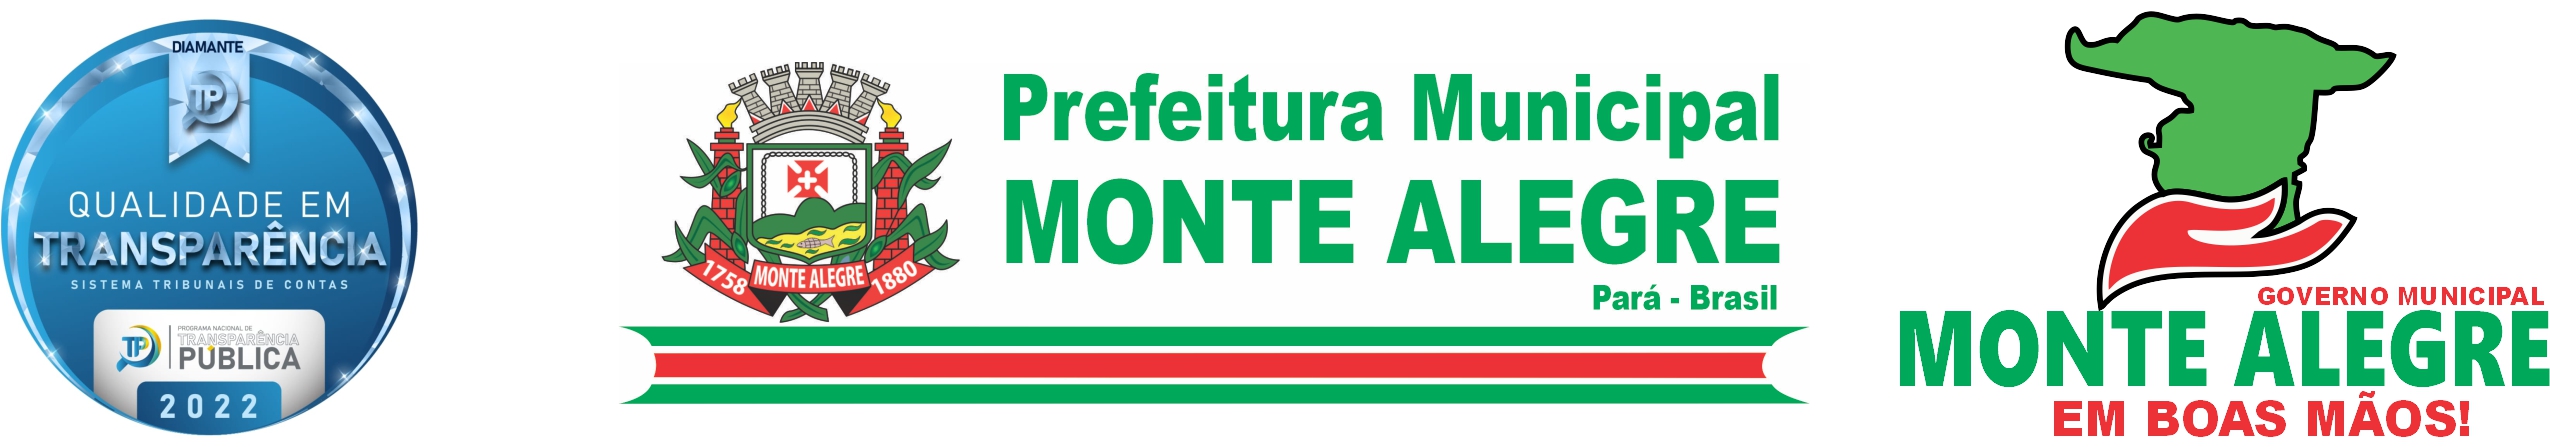 Prefeitura Municipal de Monte Alegre